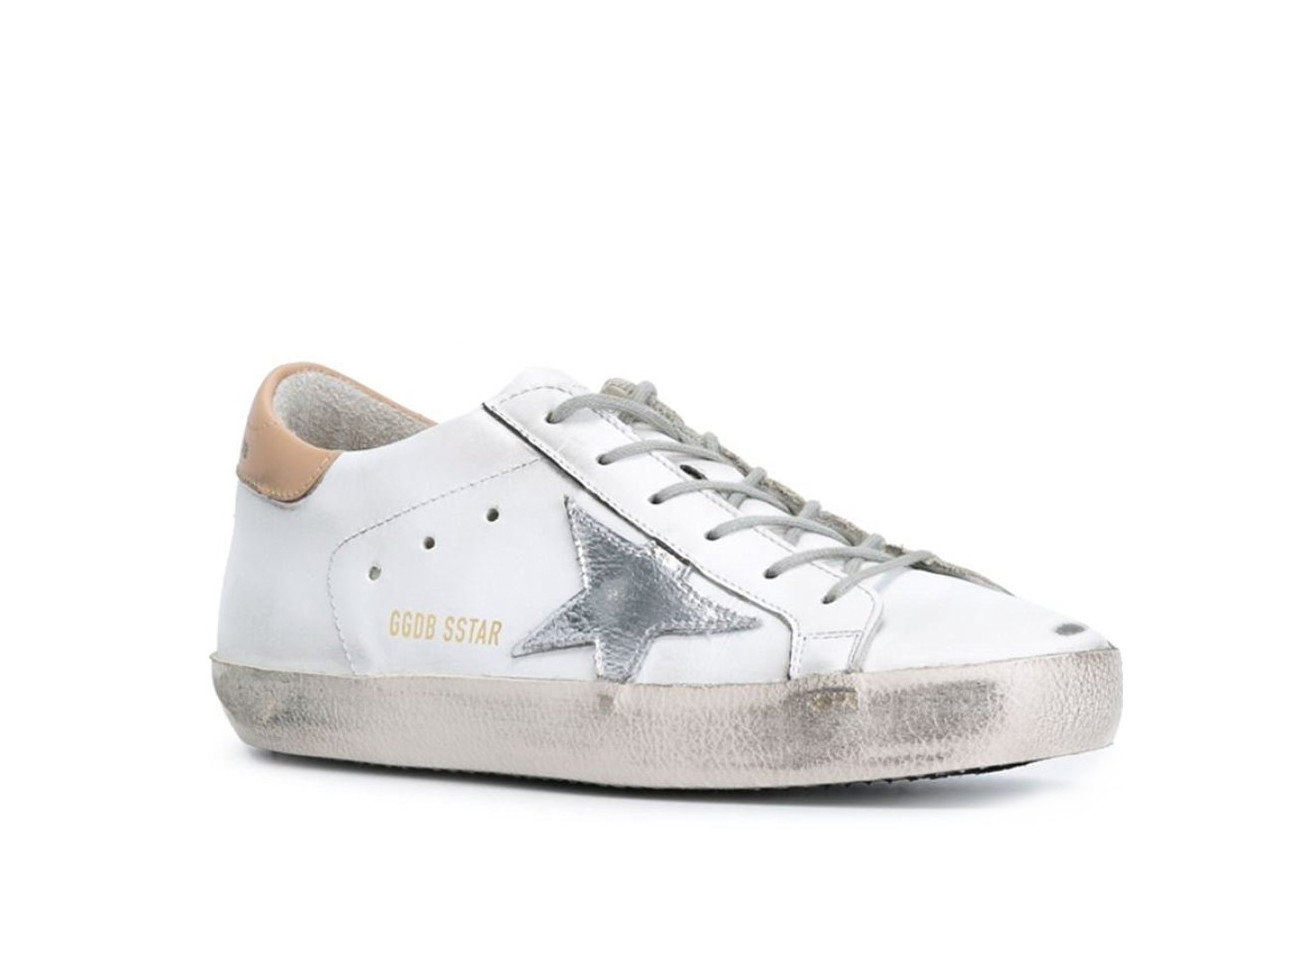 Style + Design footwear shoe clothing white sneakers product leather athletic shoe walking shoe beige tennis shoe cross training shoe outdoor shoe skate shoe